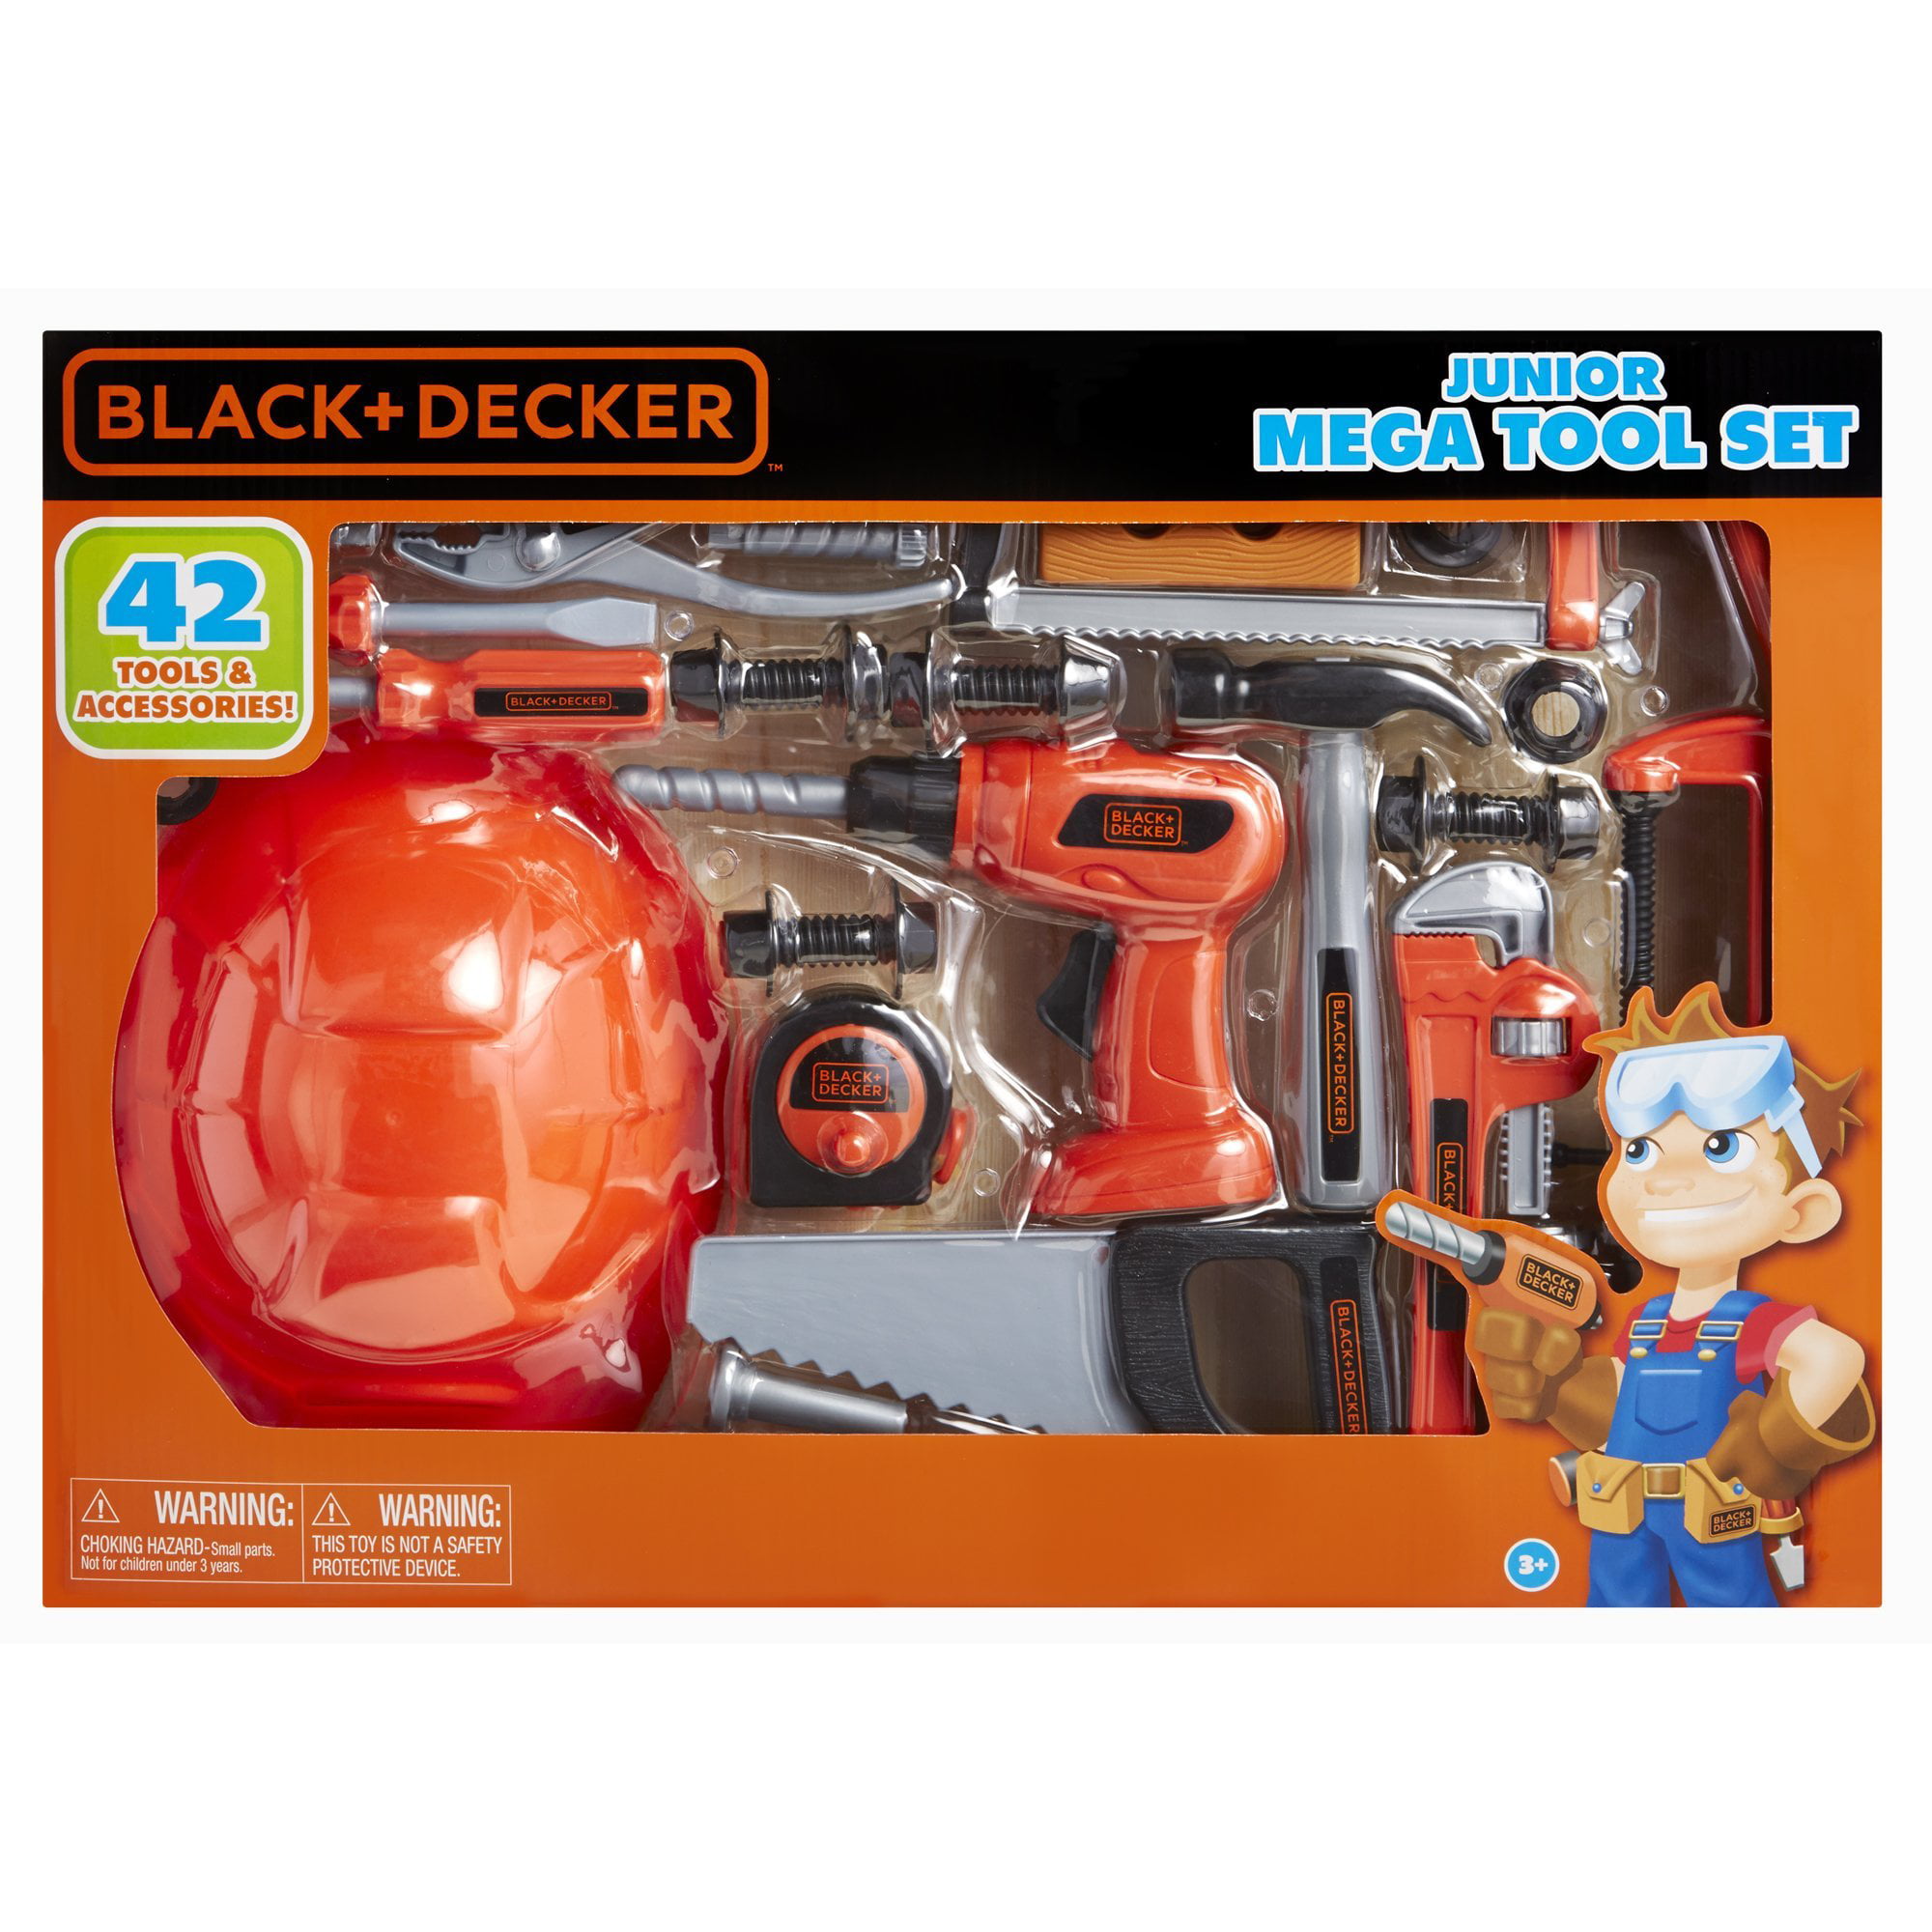 New in Box Black & Decker Jr Carpenter Tool Set with 50 tools & accessories 